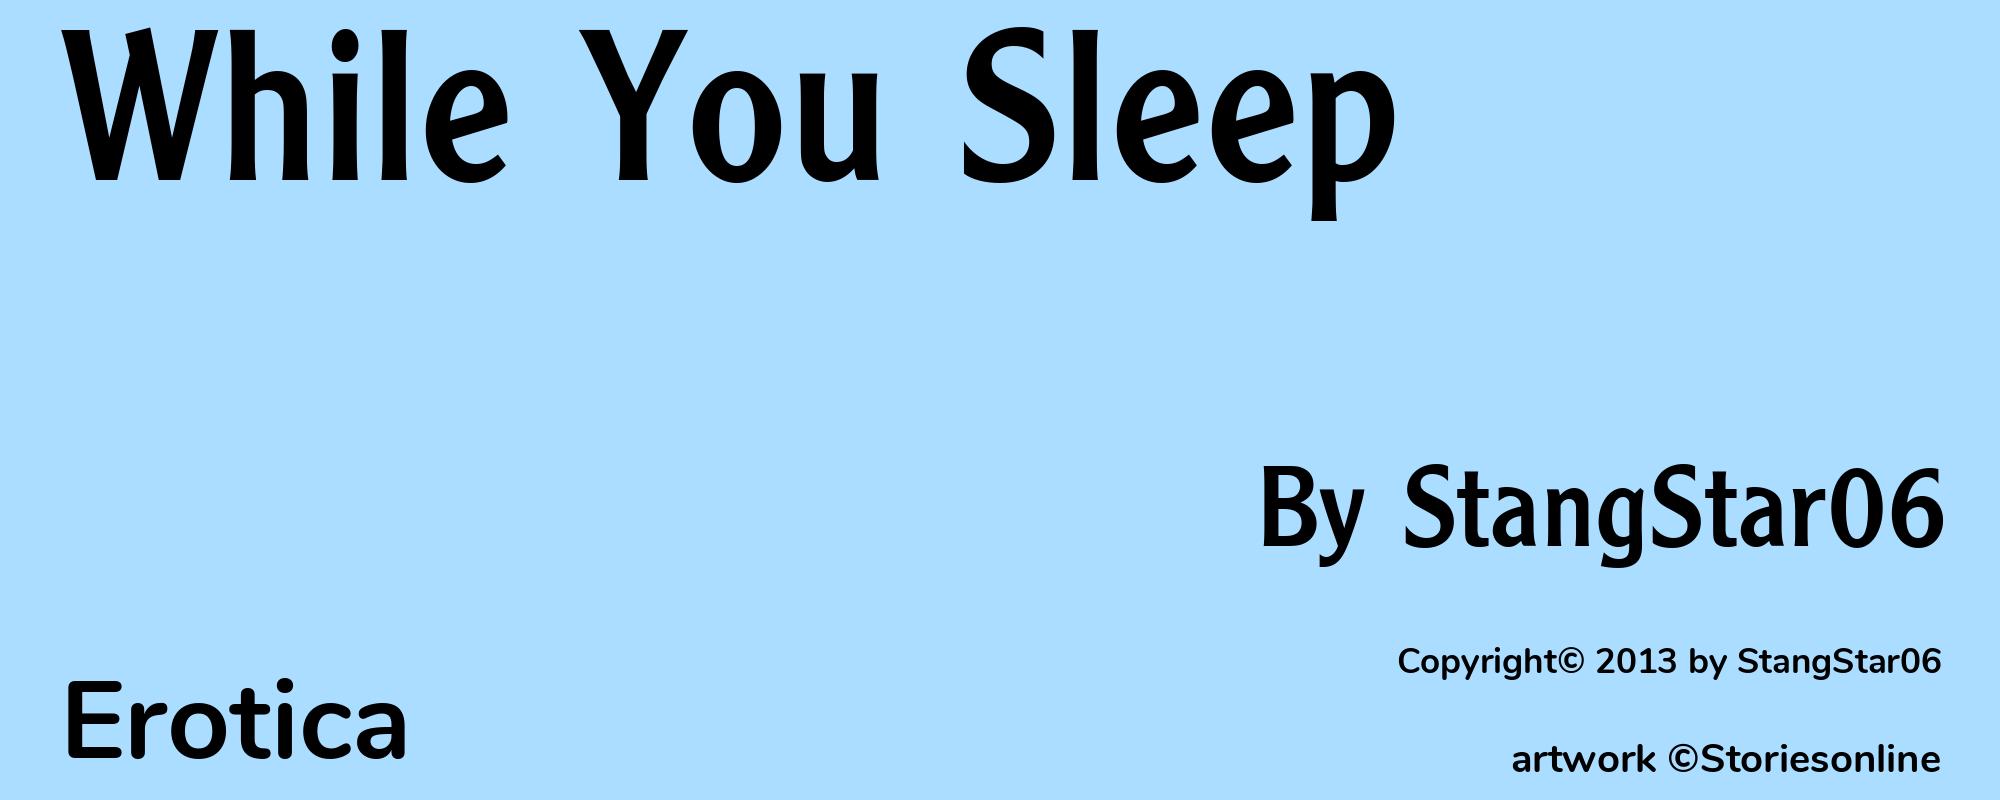 While You Sleep - Cover